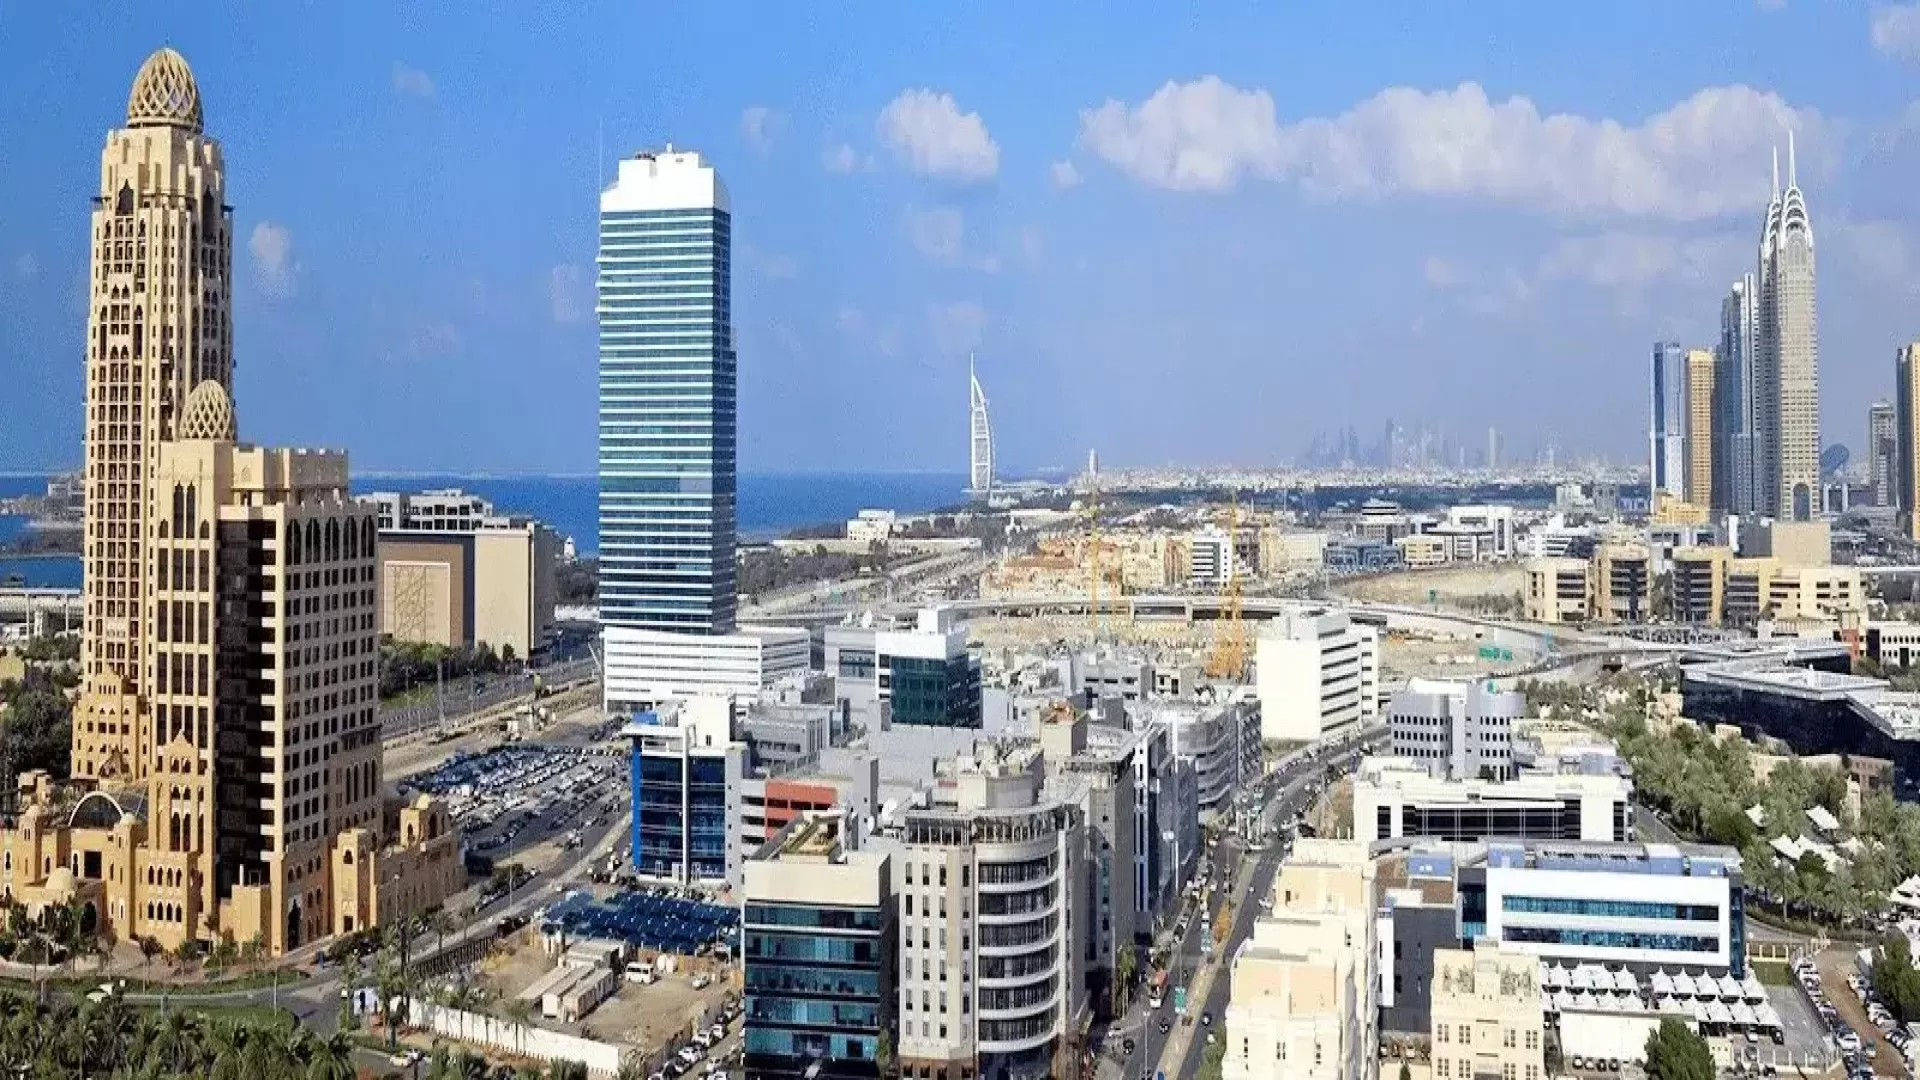 Al Barsha South